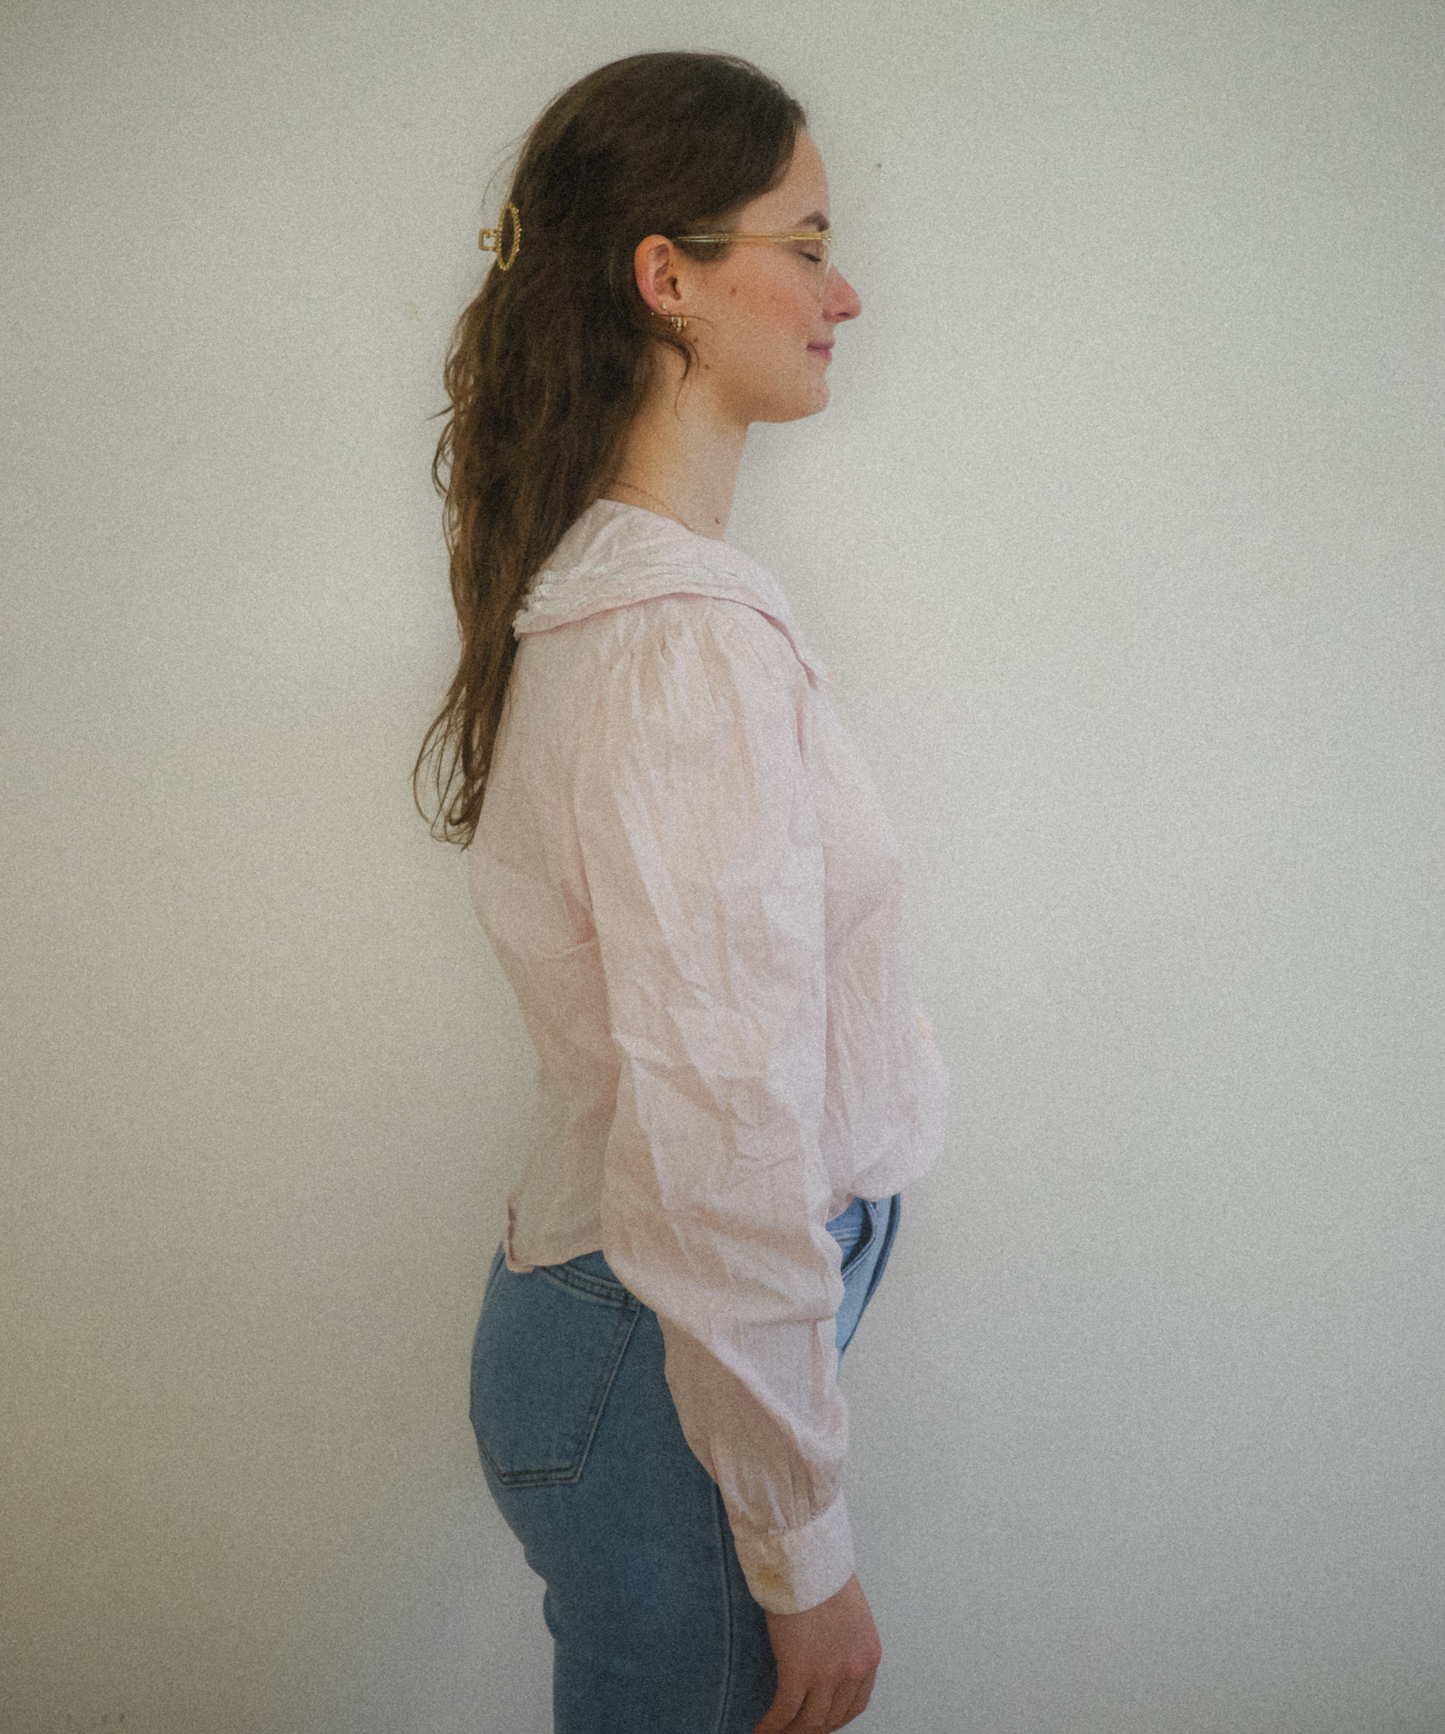 Zacht roze kanten blouse | m/l | Loïs